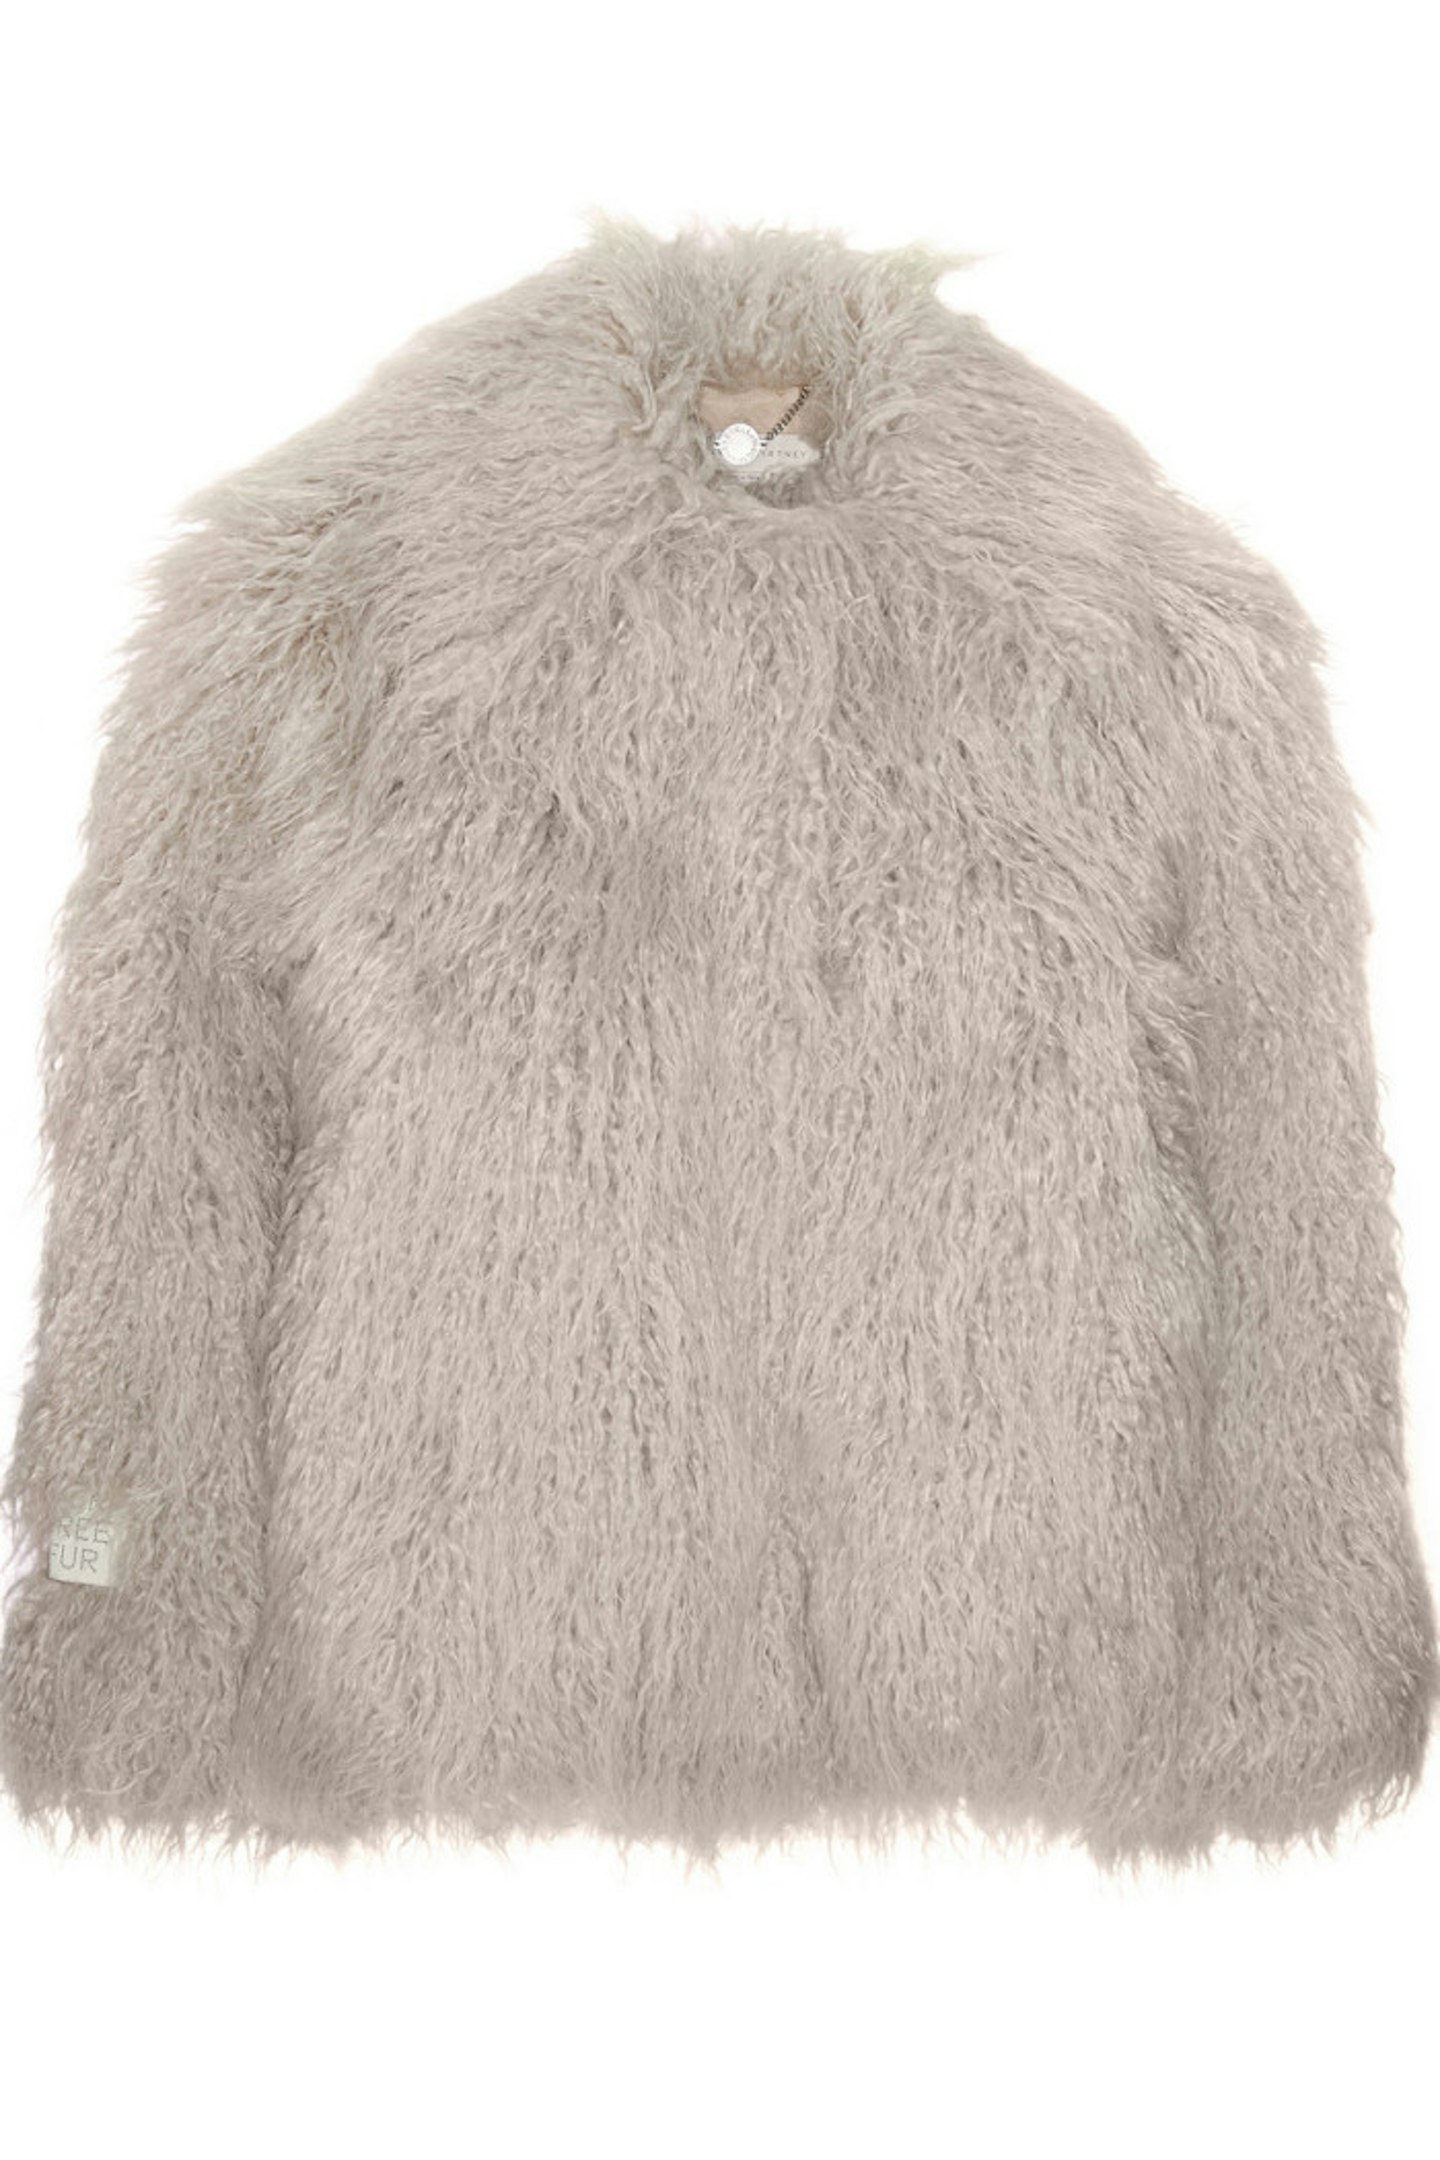 Stella McCartney faux fur coat